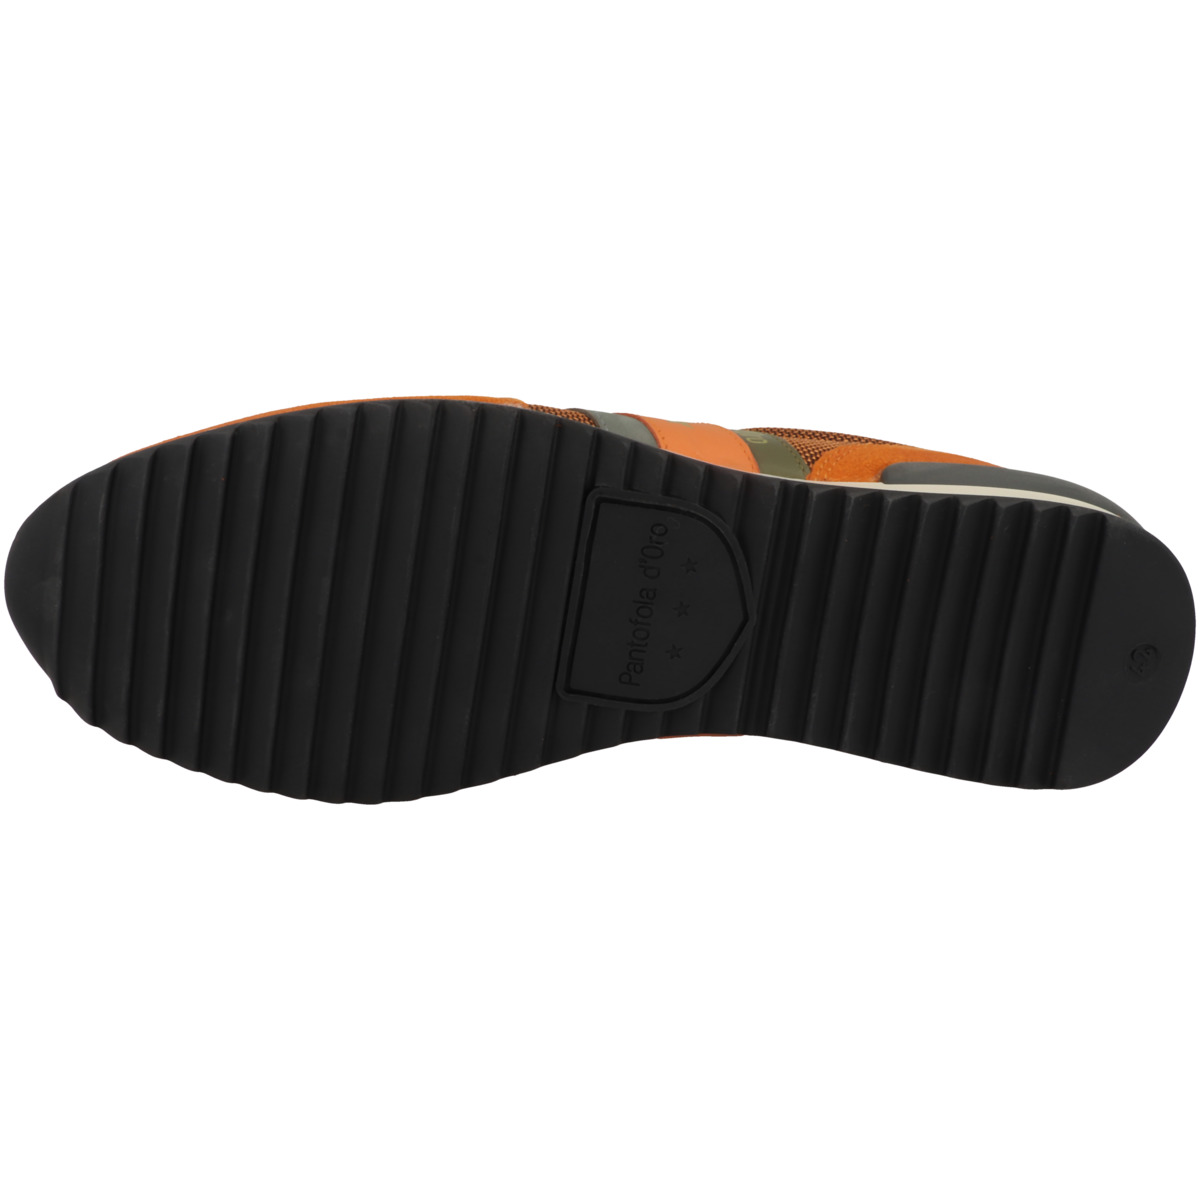 Pantofola d Oro Rizza N Uomo Low Sneaker orange